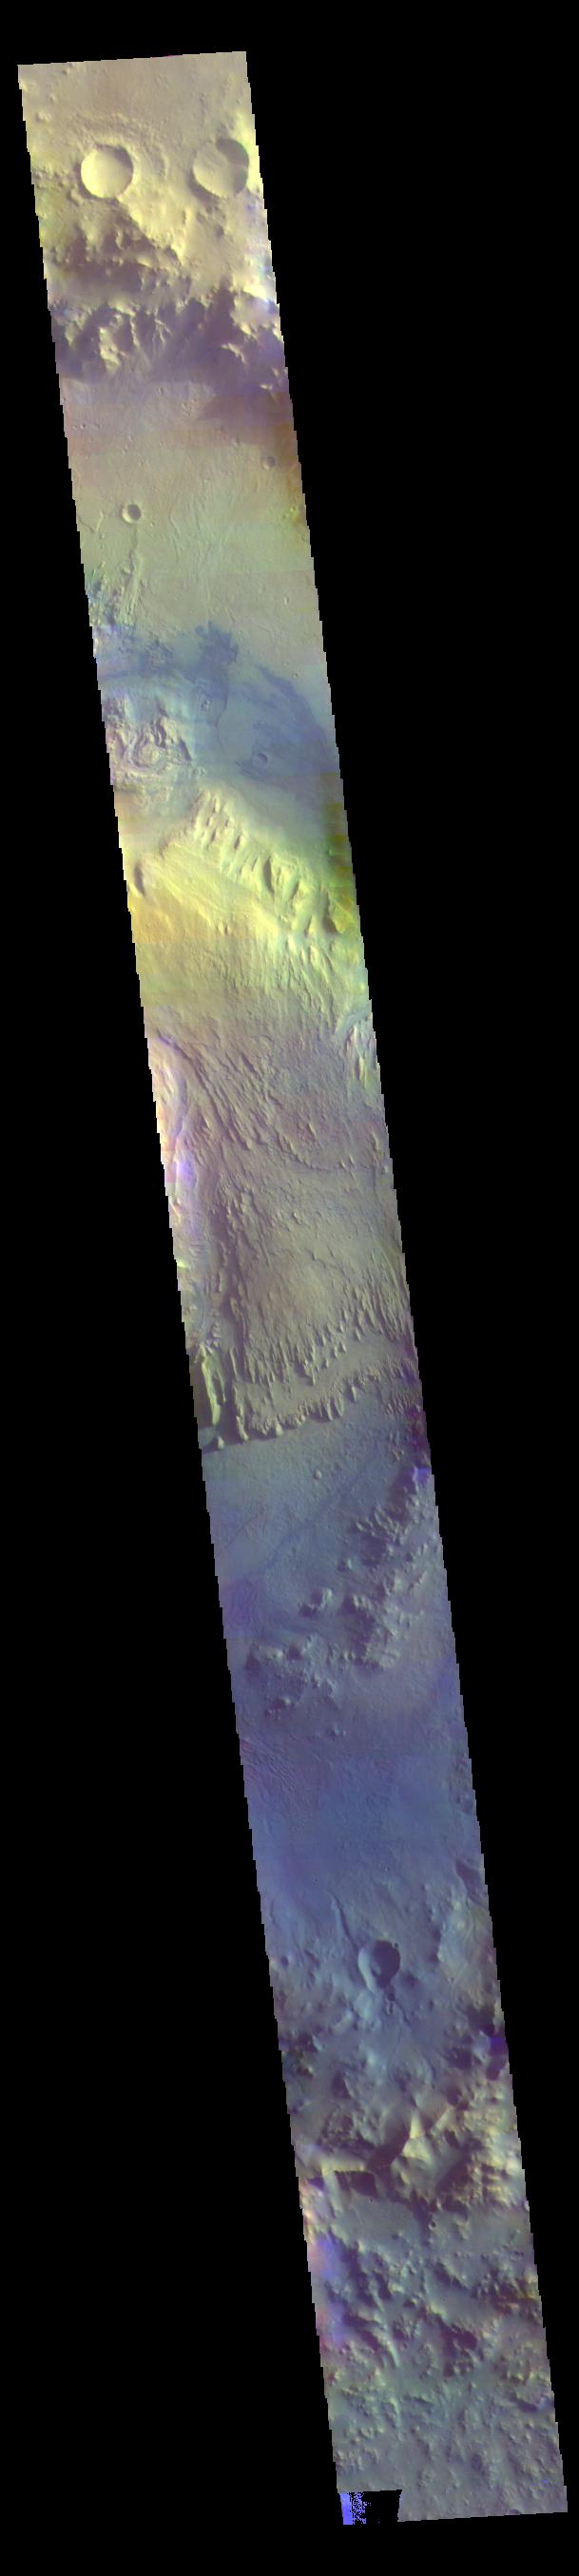 PIA24509: Gale Crater - False Color